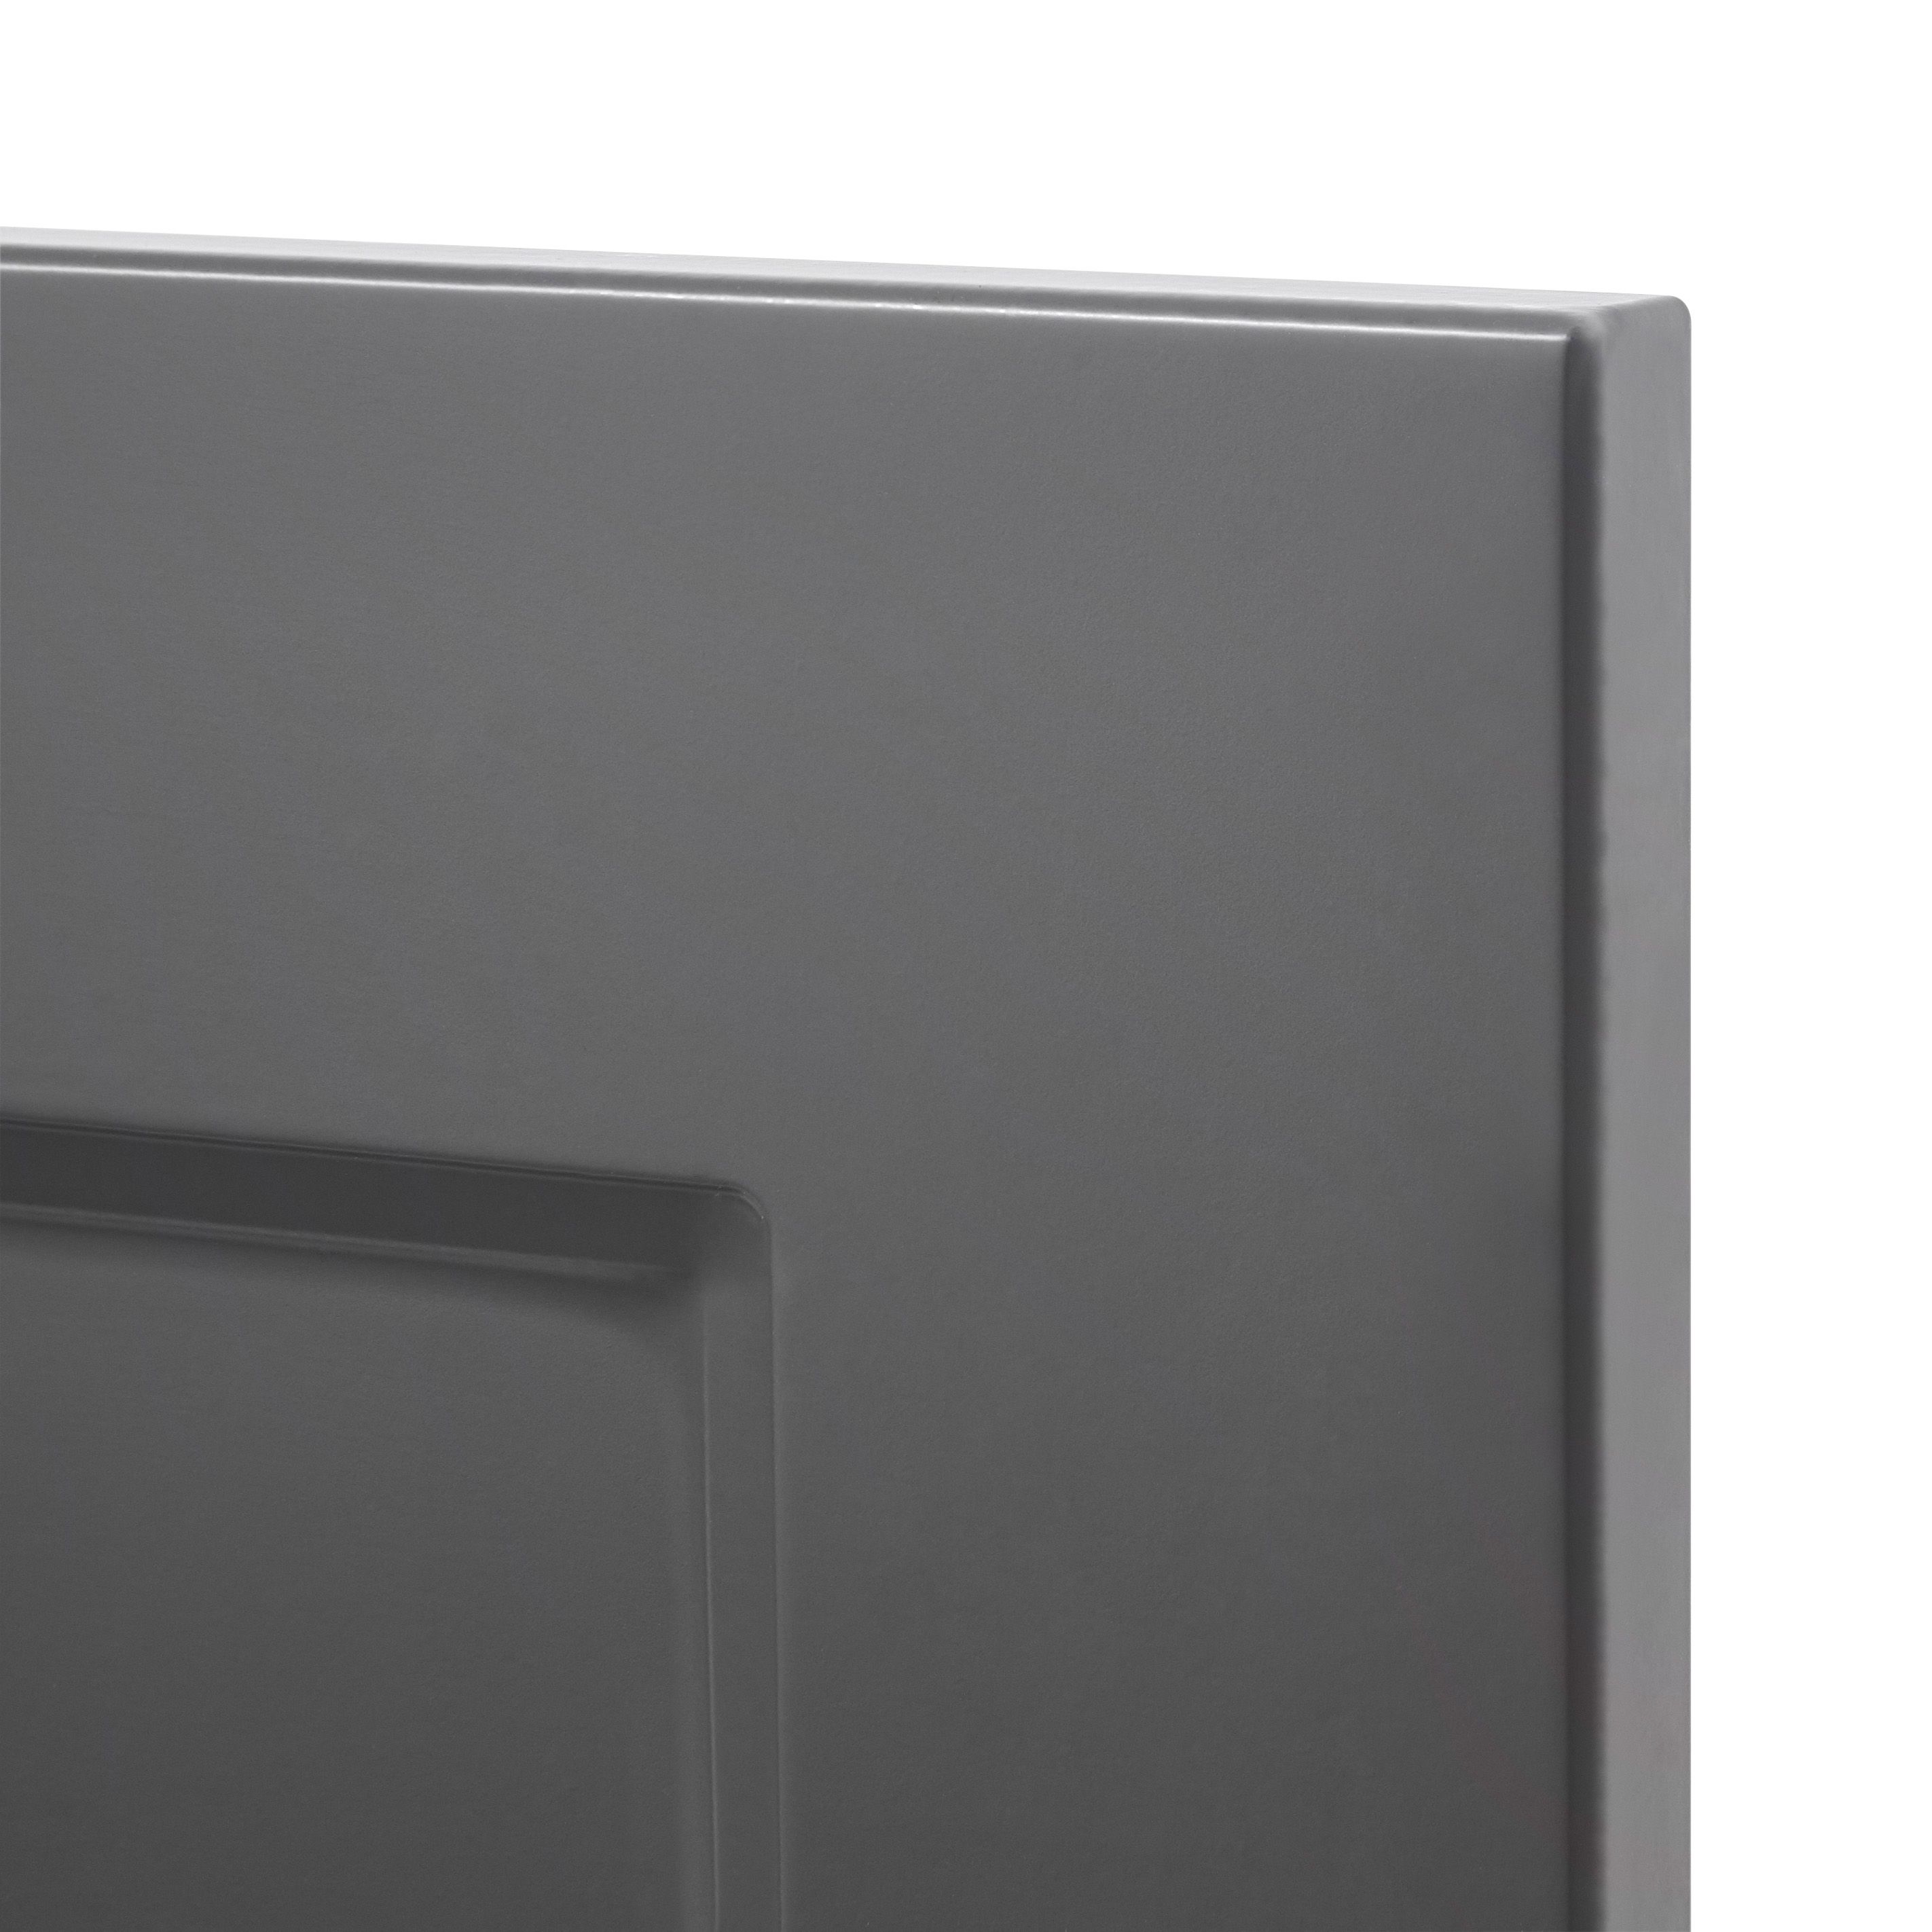 GoodHome Artemisia Matt graphite classic shaker Appliance Cabinet door (W)600mm (H)626mm (T)18mm